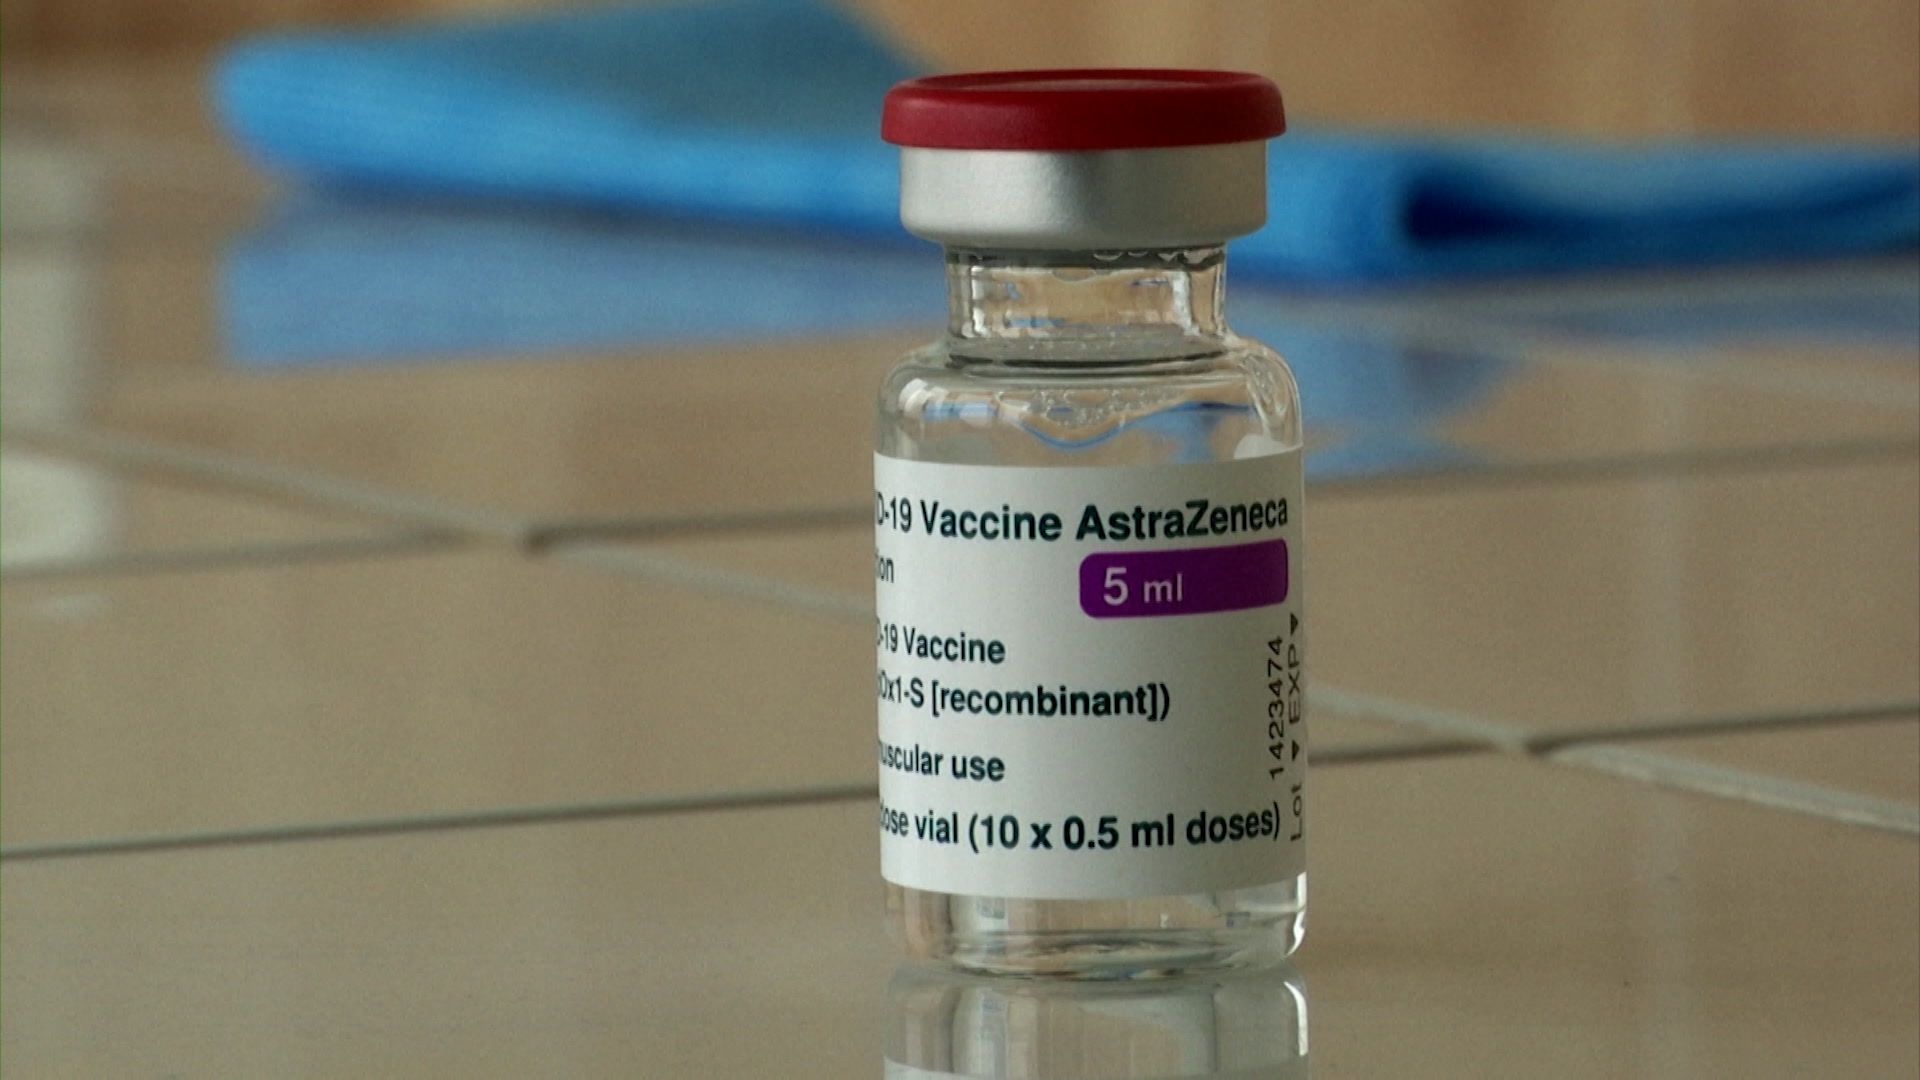 vaccin astrazeneca composition efficacite origine en france